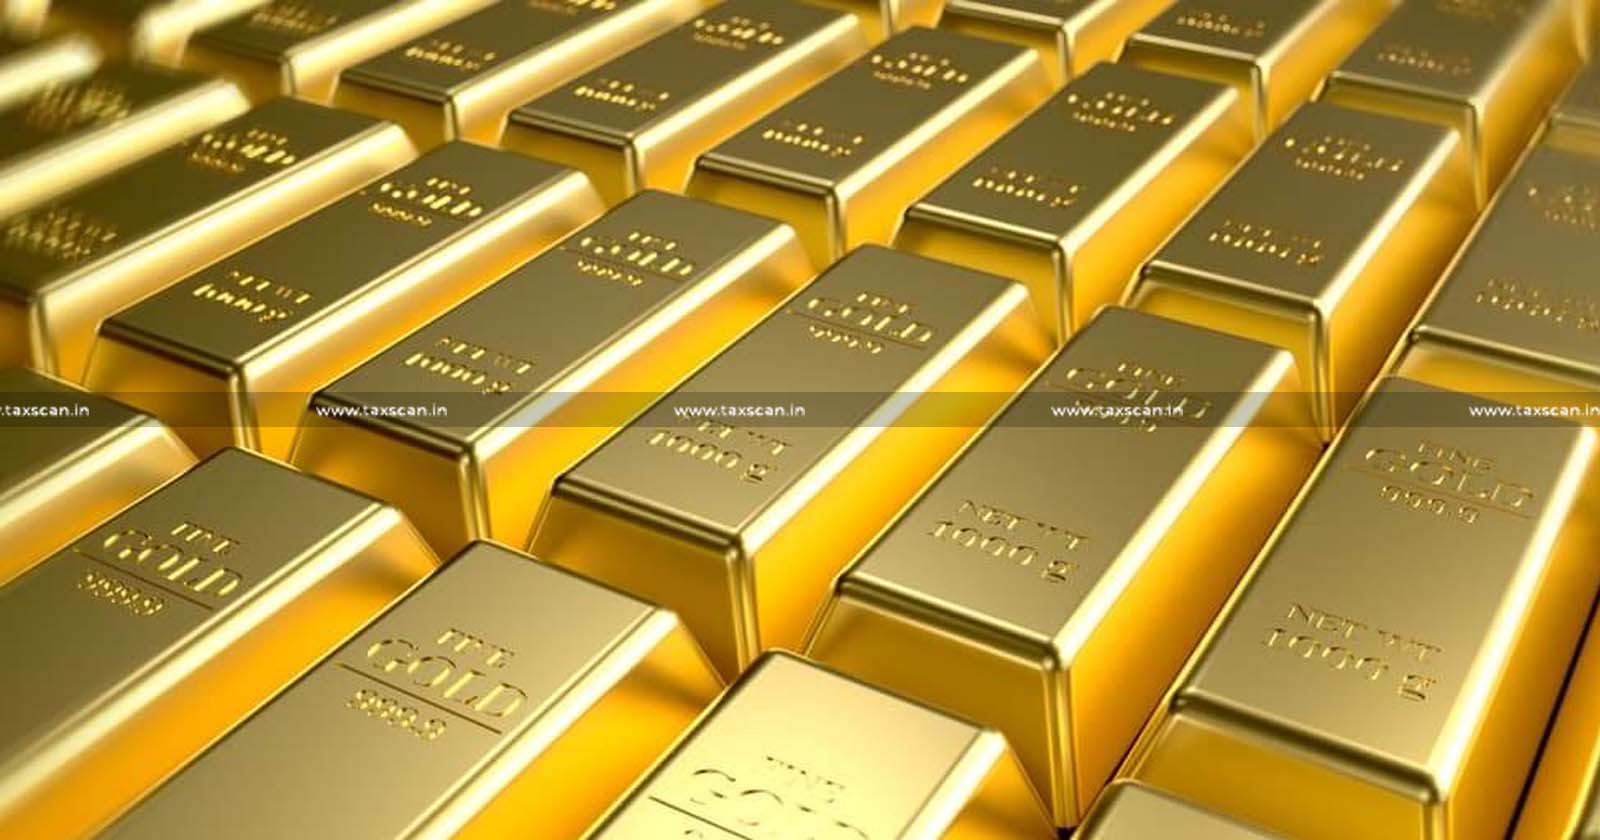 Delhi High Court - Gold Bars - Gold Bars Seized - Gold Bars Seized by DRI - Disposal of Release Application - DRI - taxscan